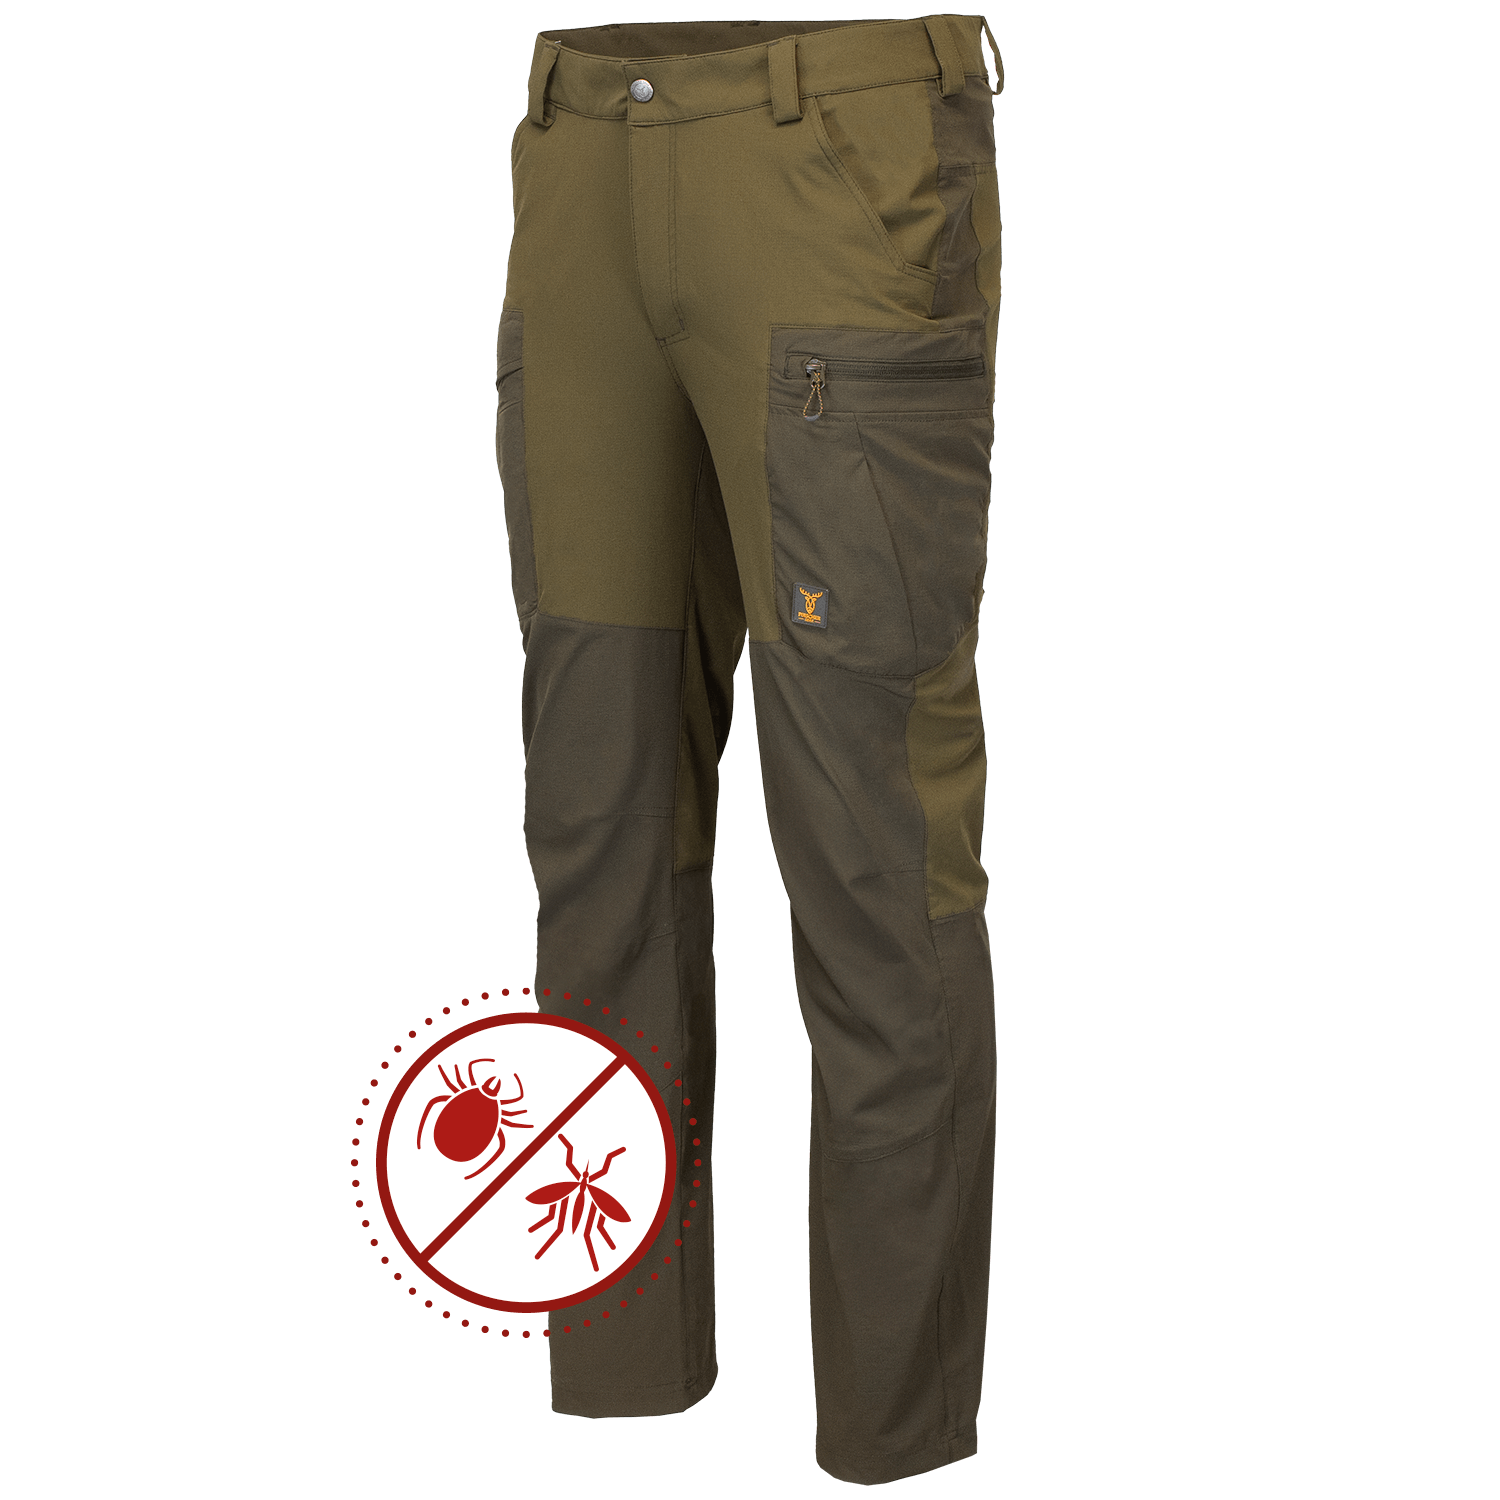 Pirscher Gear Ripstop Tanatex Pants - Hunting Trousers